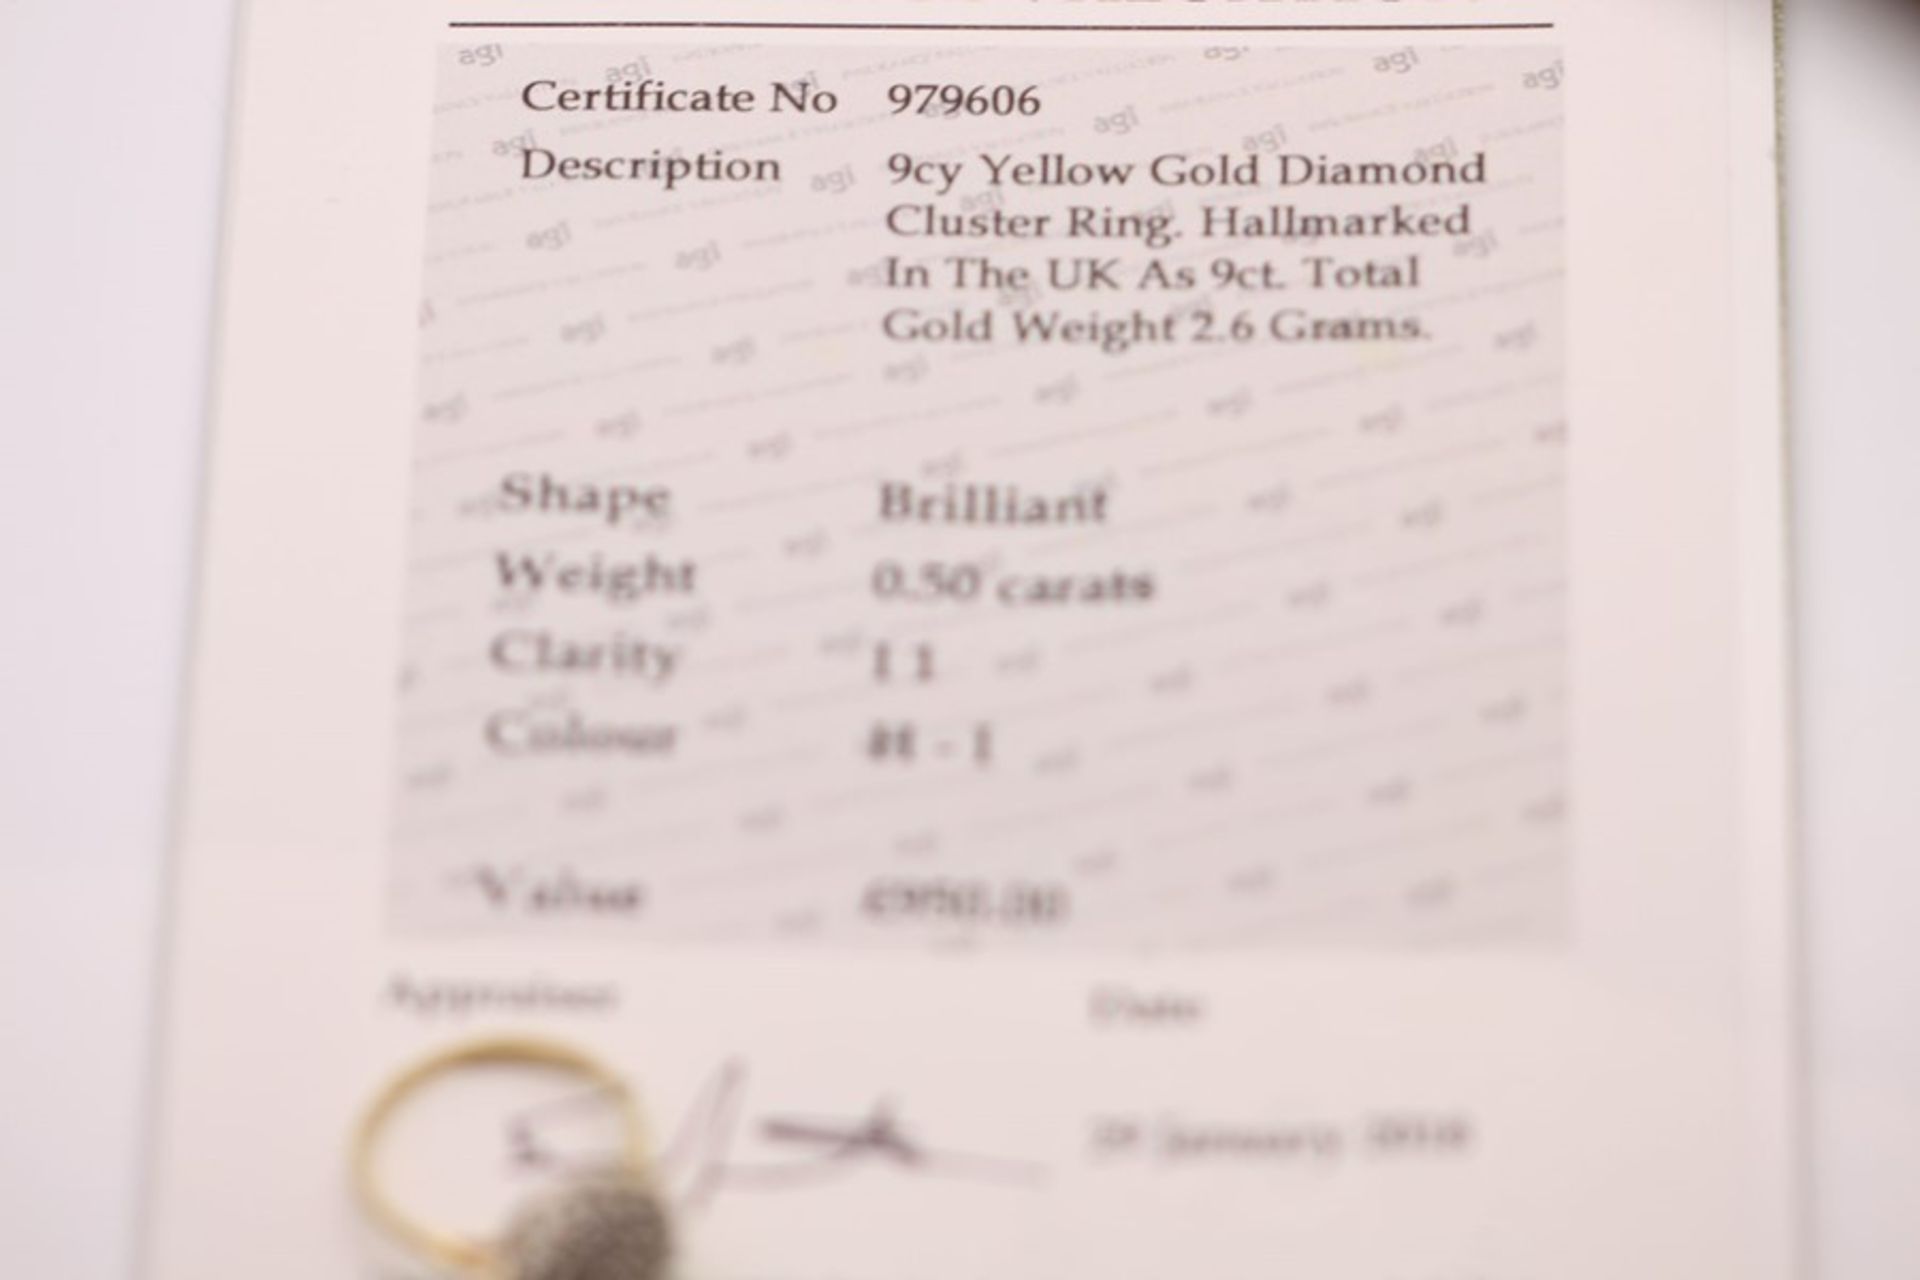 9CT YELLOW GOLD LADIES DIAMOND CLUSTER RING - Image 4 of 4